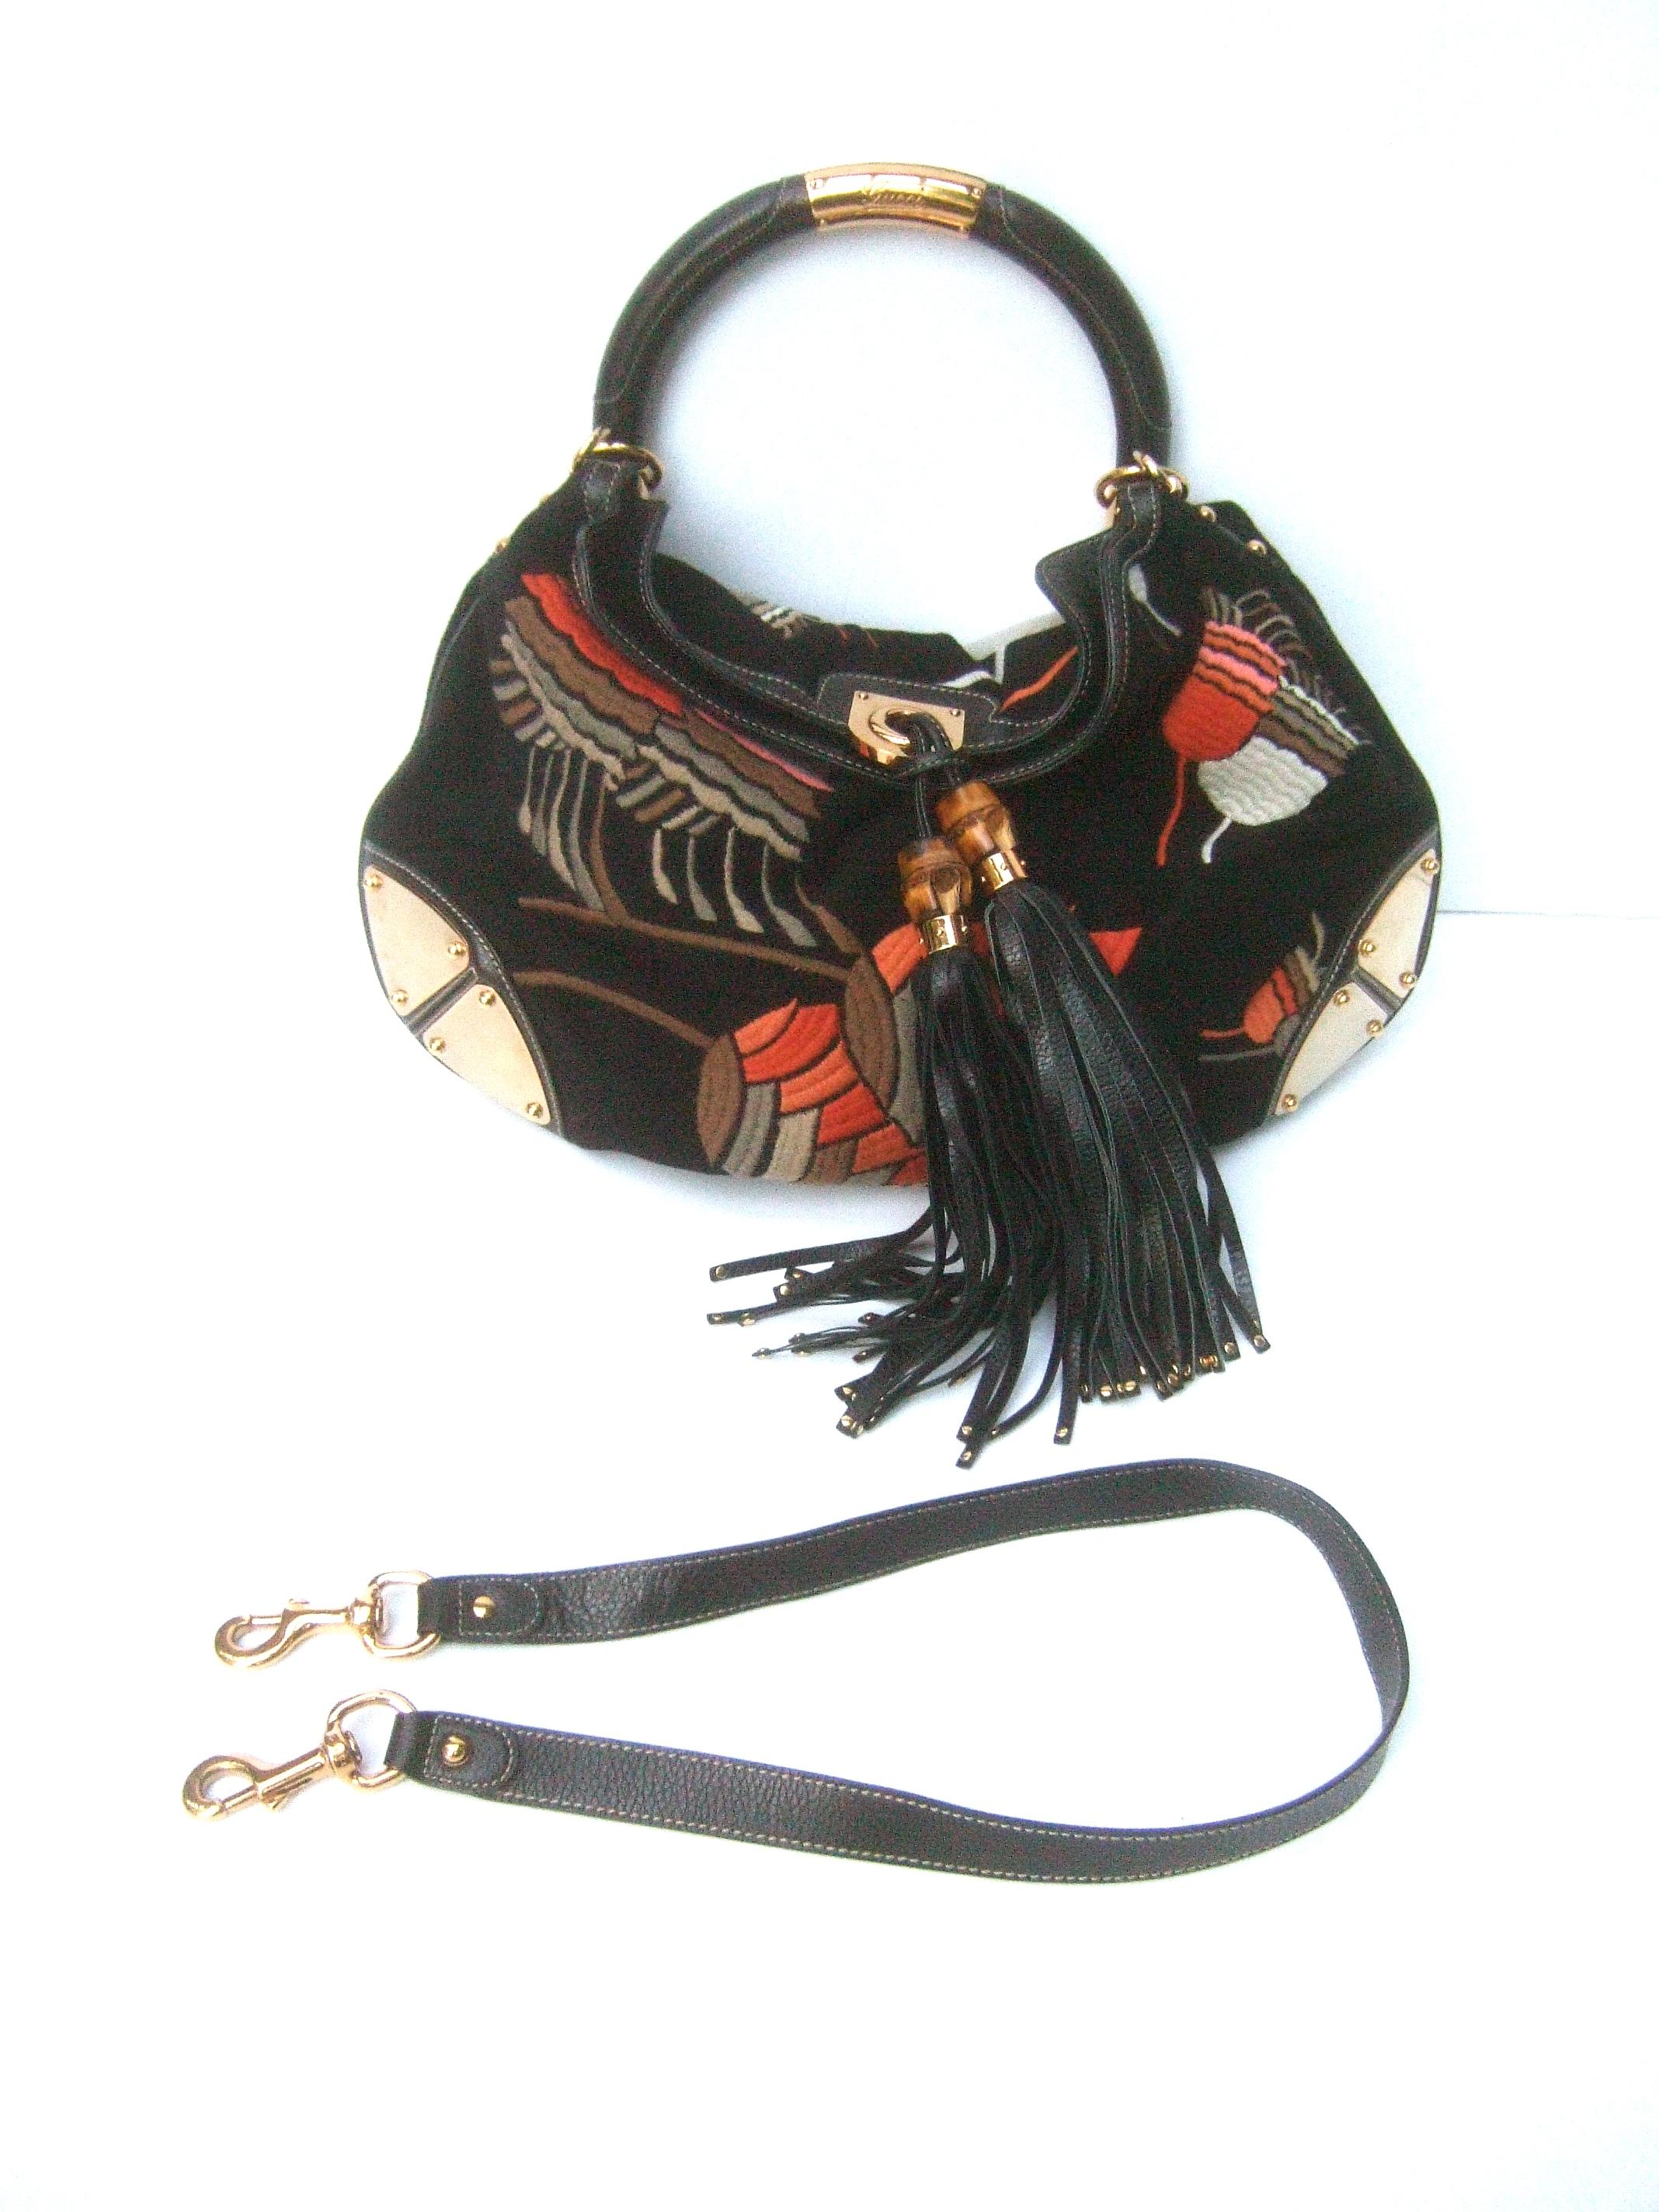 Gucci Italy Rare Embroidered Black Wool Large Handbag - Shoulder Bag c 1990s 8